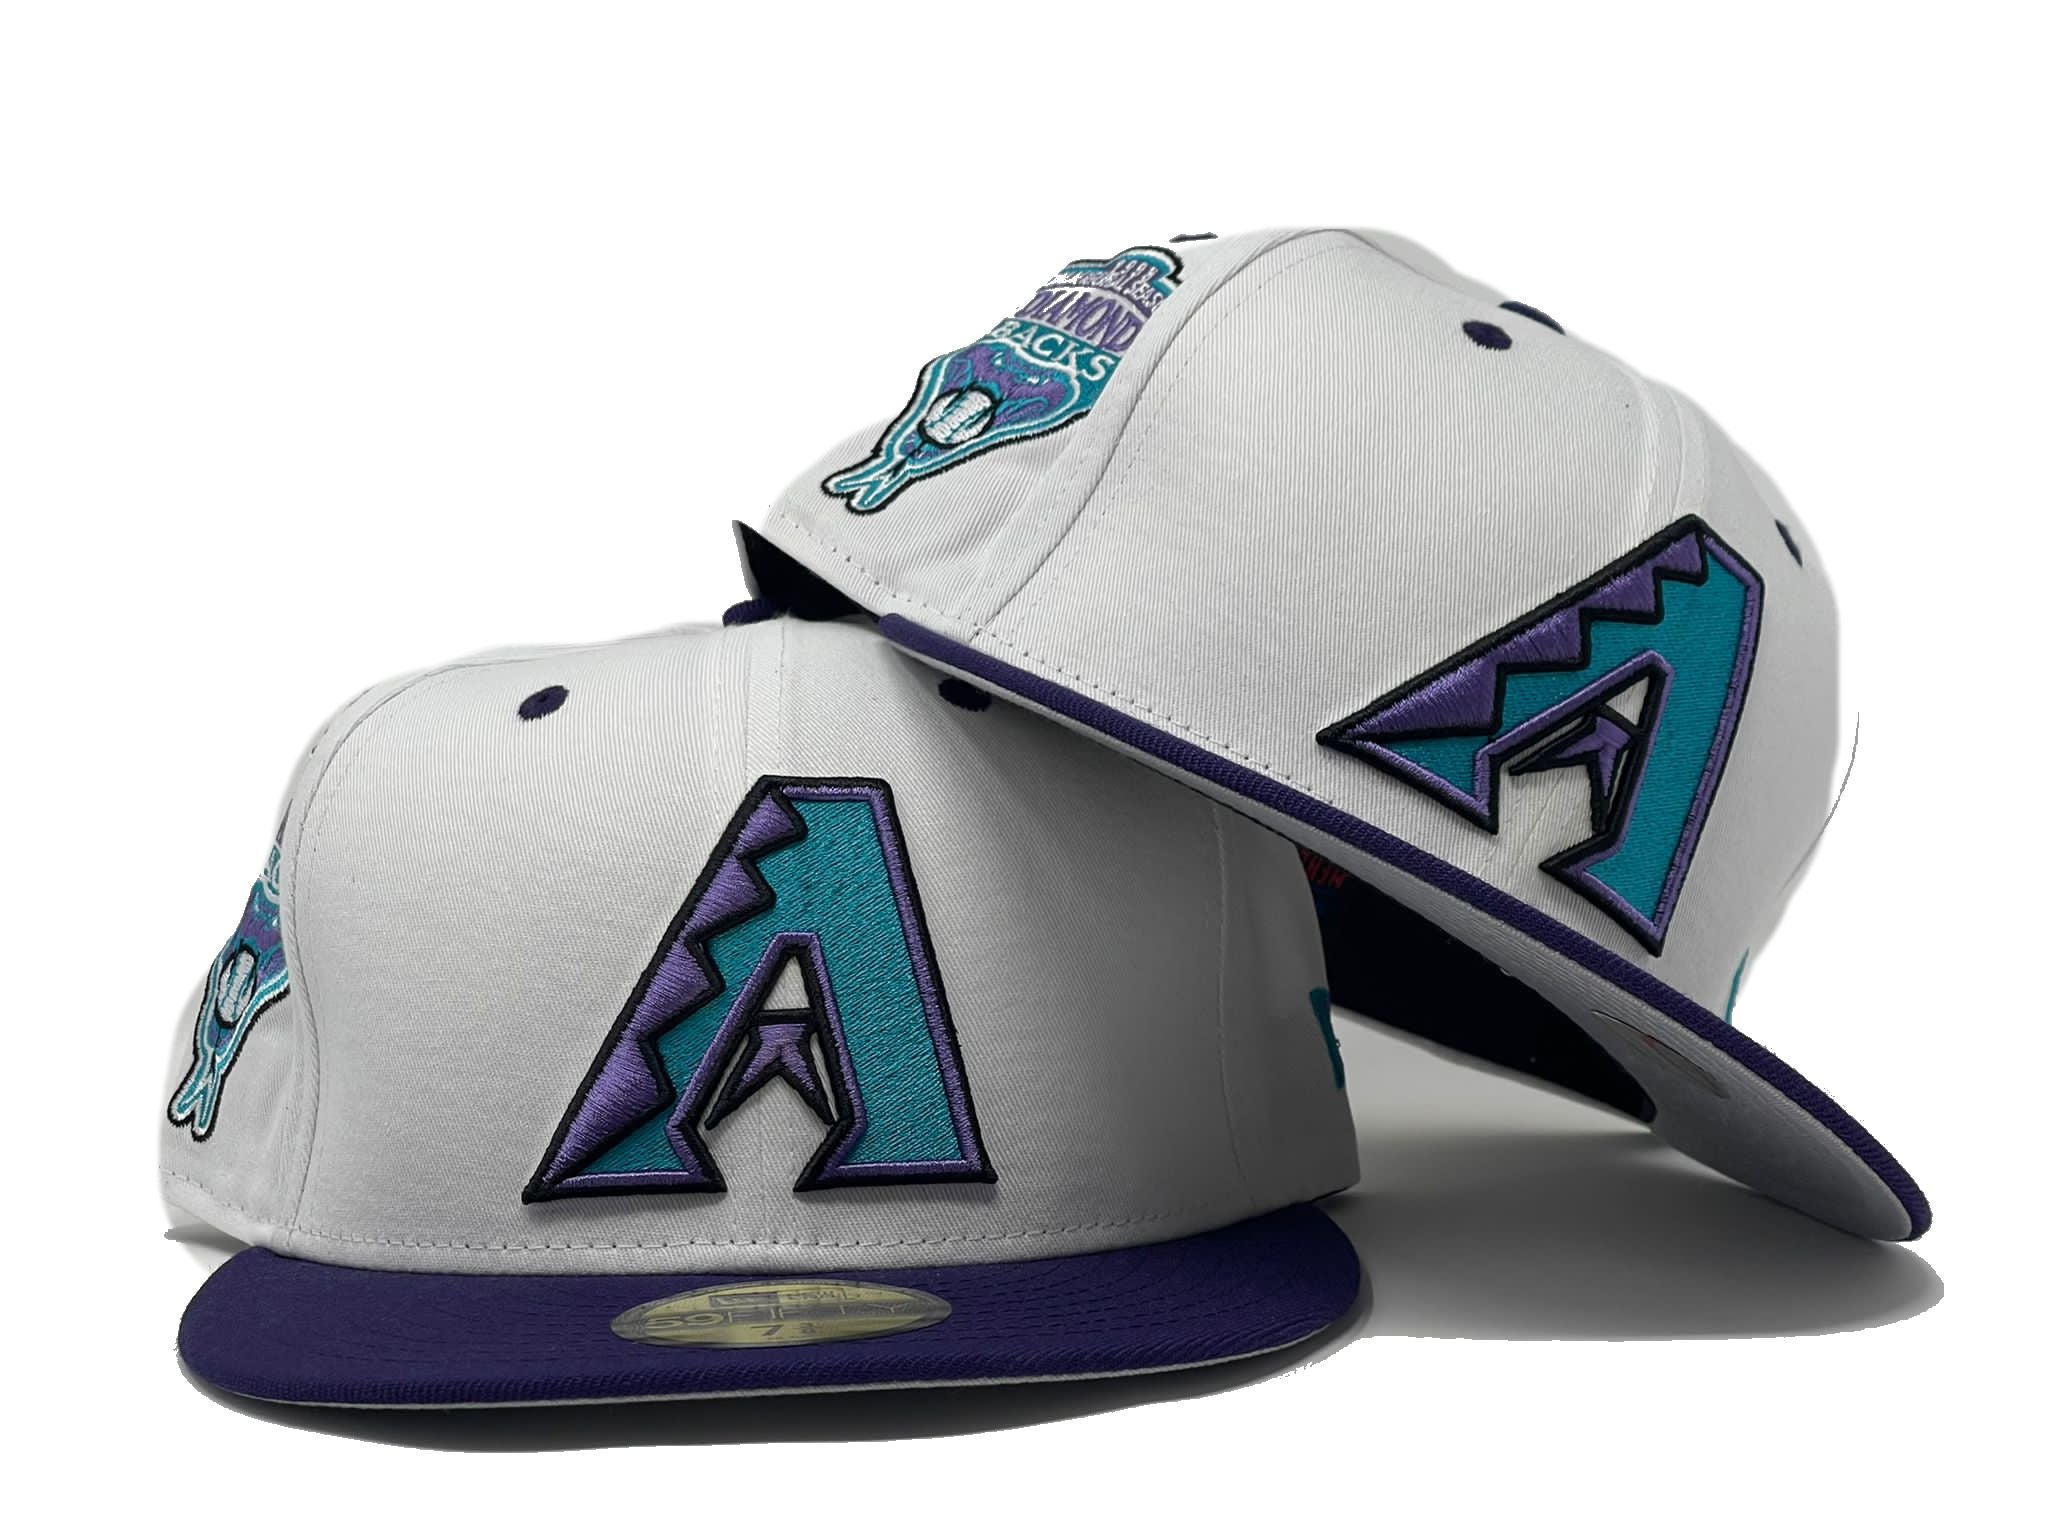 Arizona Diamondbacks 98 IS. New Era 59FIFTY Teal & Purple Hat Gray